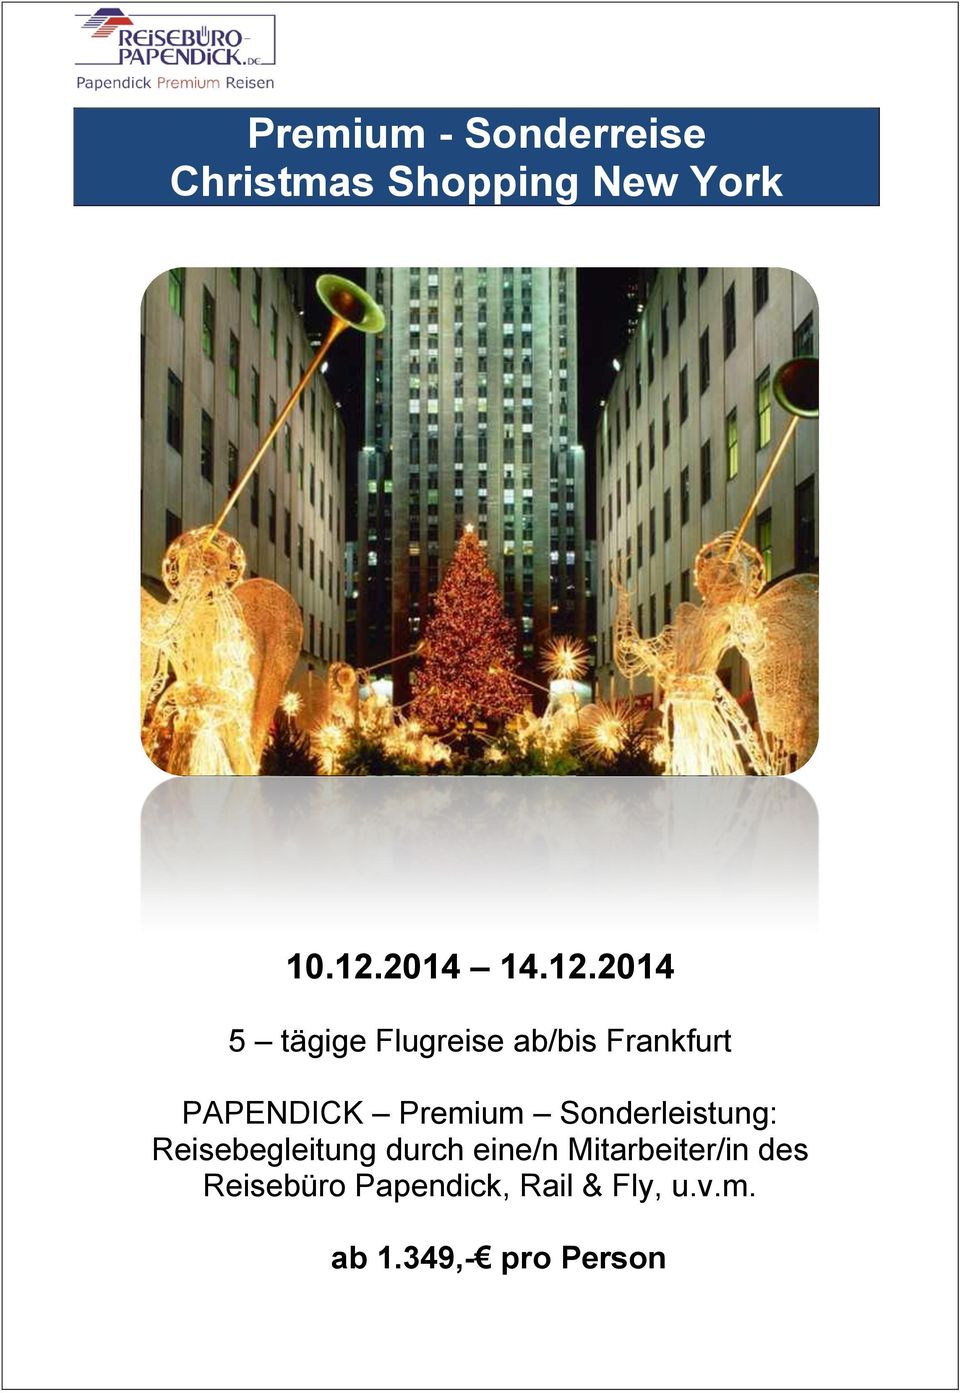 2014 5 tägige Flugreise ab/bis Frankfurt PAPENDICK Premium